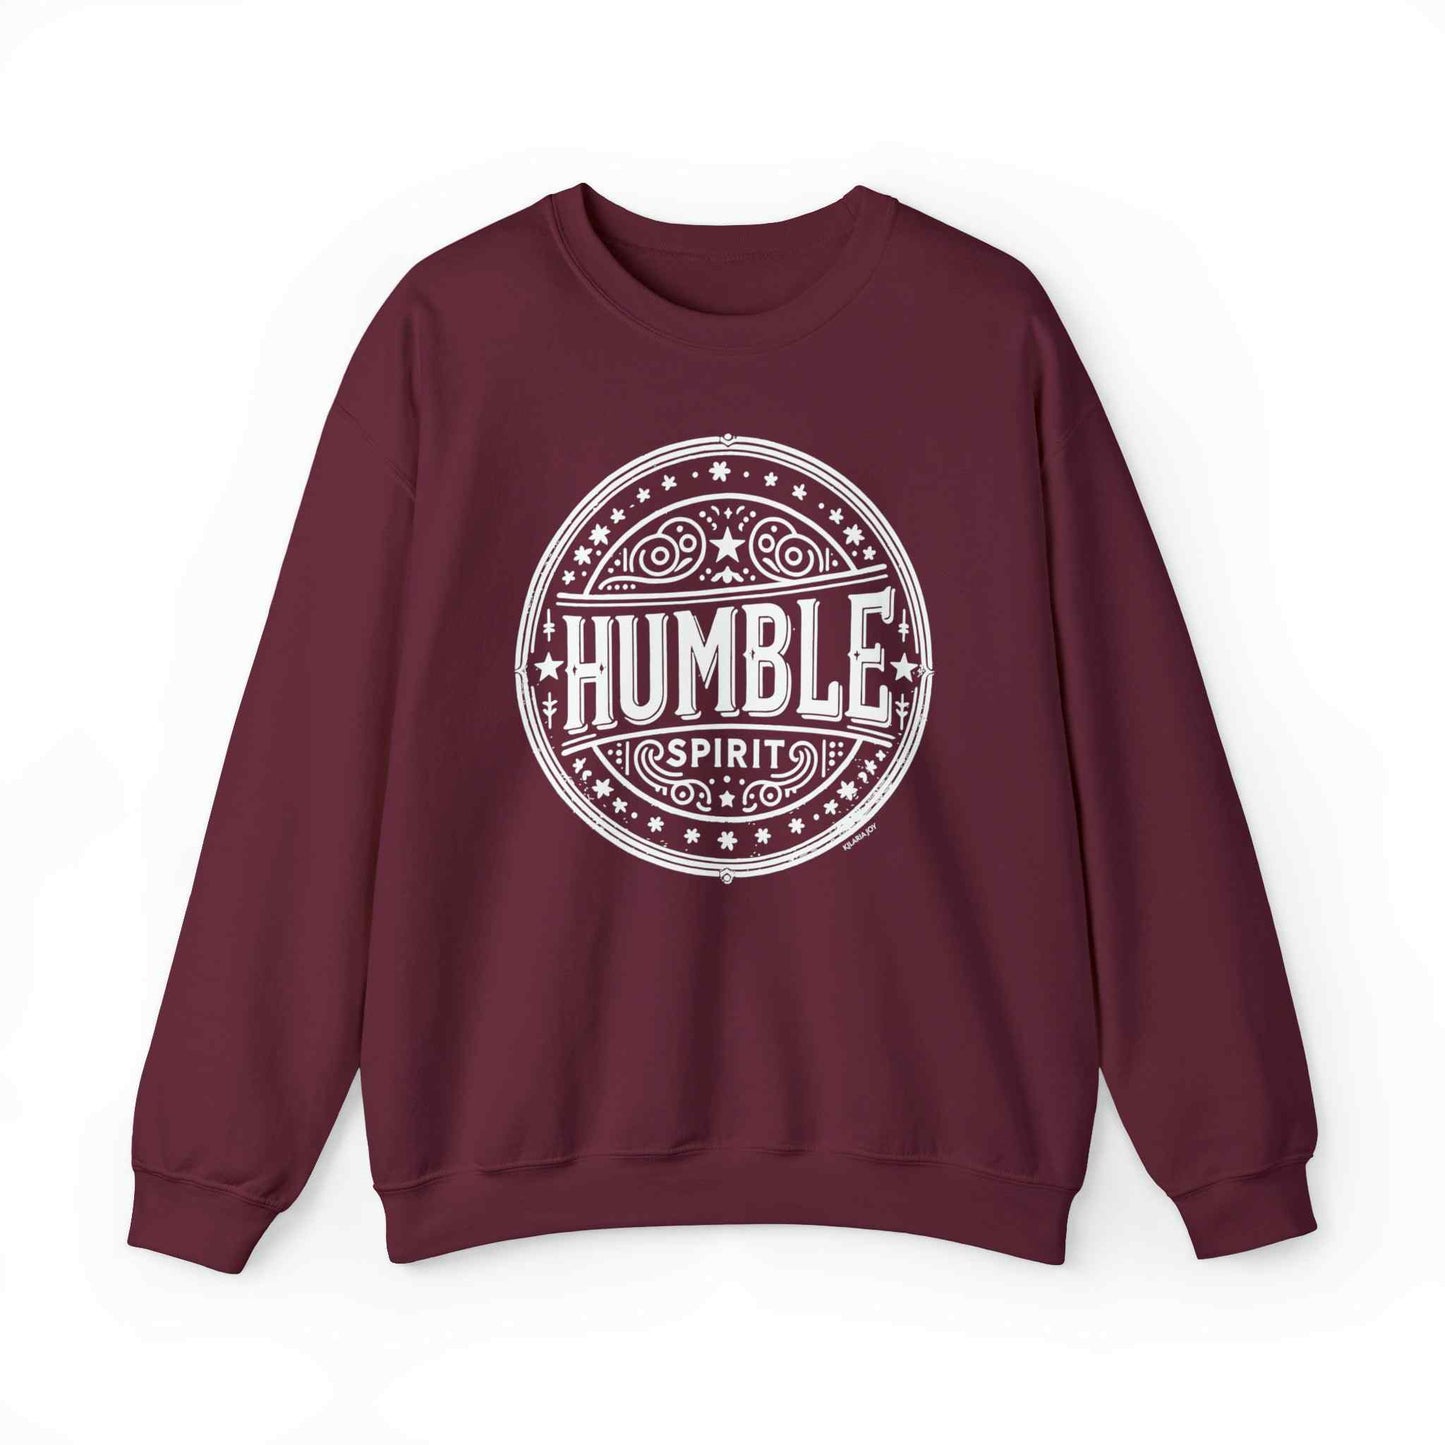 Humble Spirit Women's Classic Fit Sweatshirt